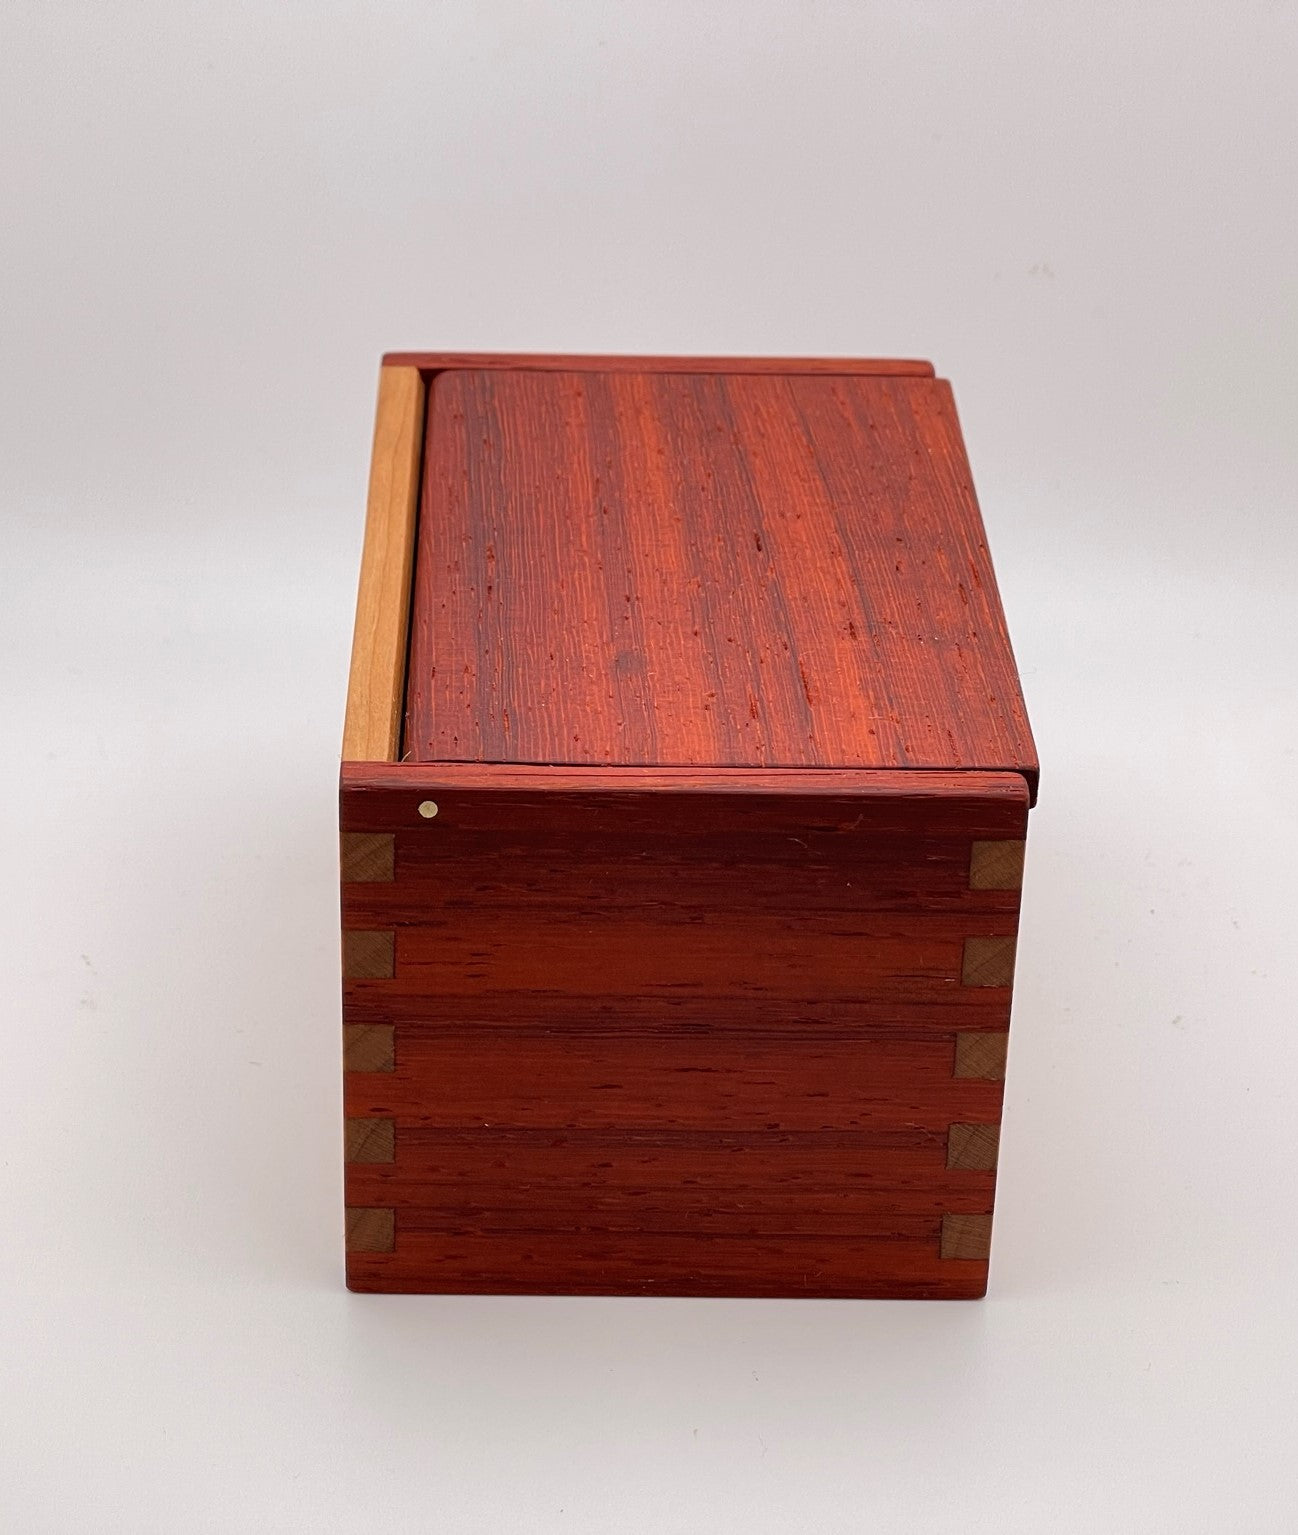 Wood Salt Cellar - Salt Box - Salt Pig - Keepsake Box - Exotic - Padauk and Cherry